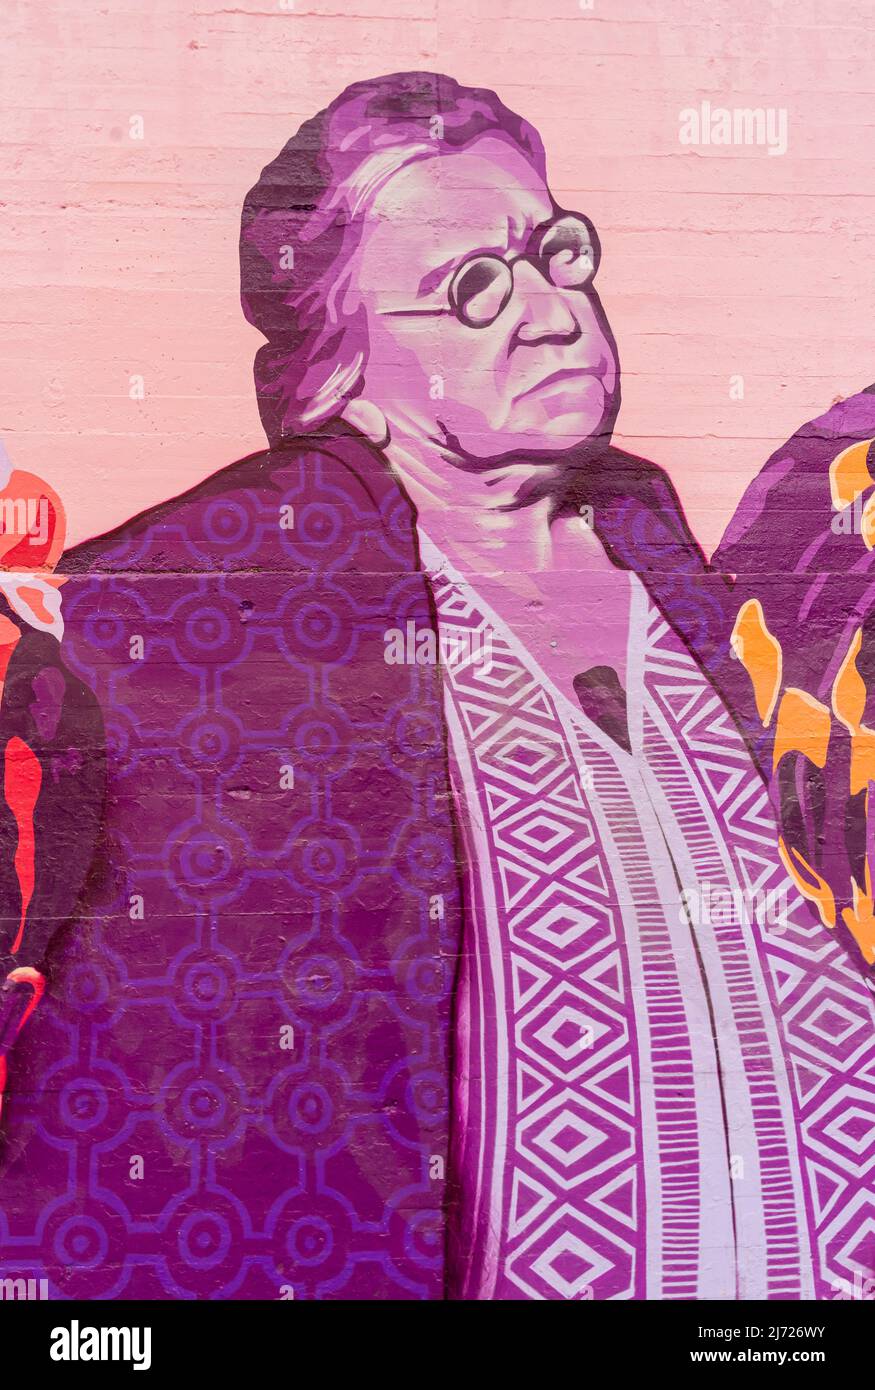 Mural of Russian anarchist activist Emma Goldman, Concepcion feminist mural  La unión hace la fuerza,  on the wall in, Madrid Spain Stock Photo